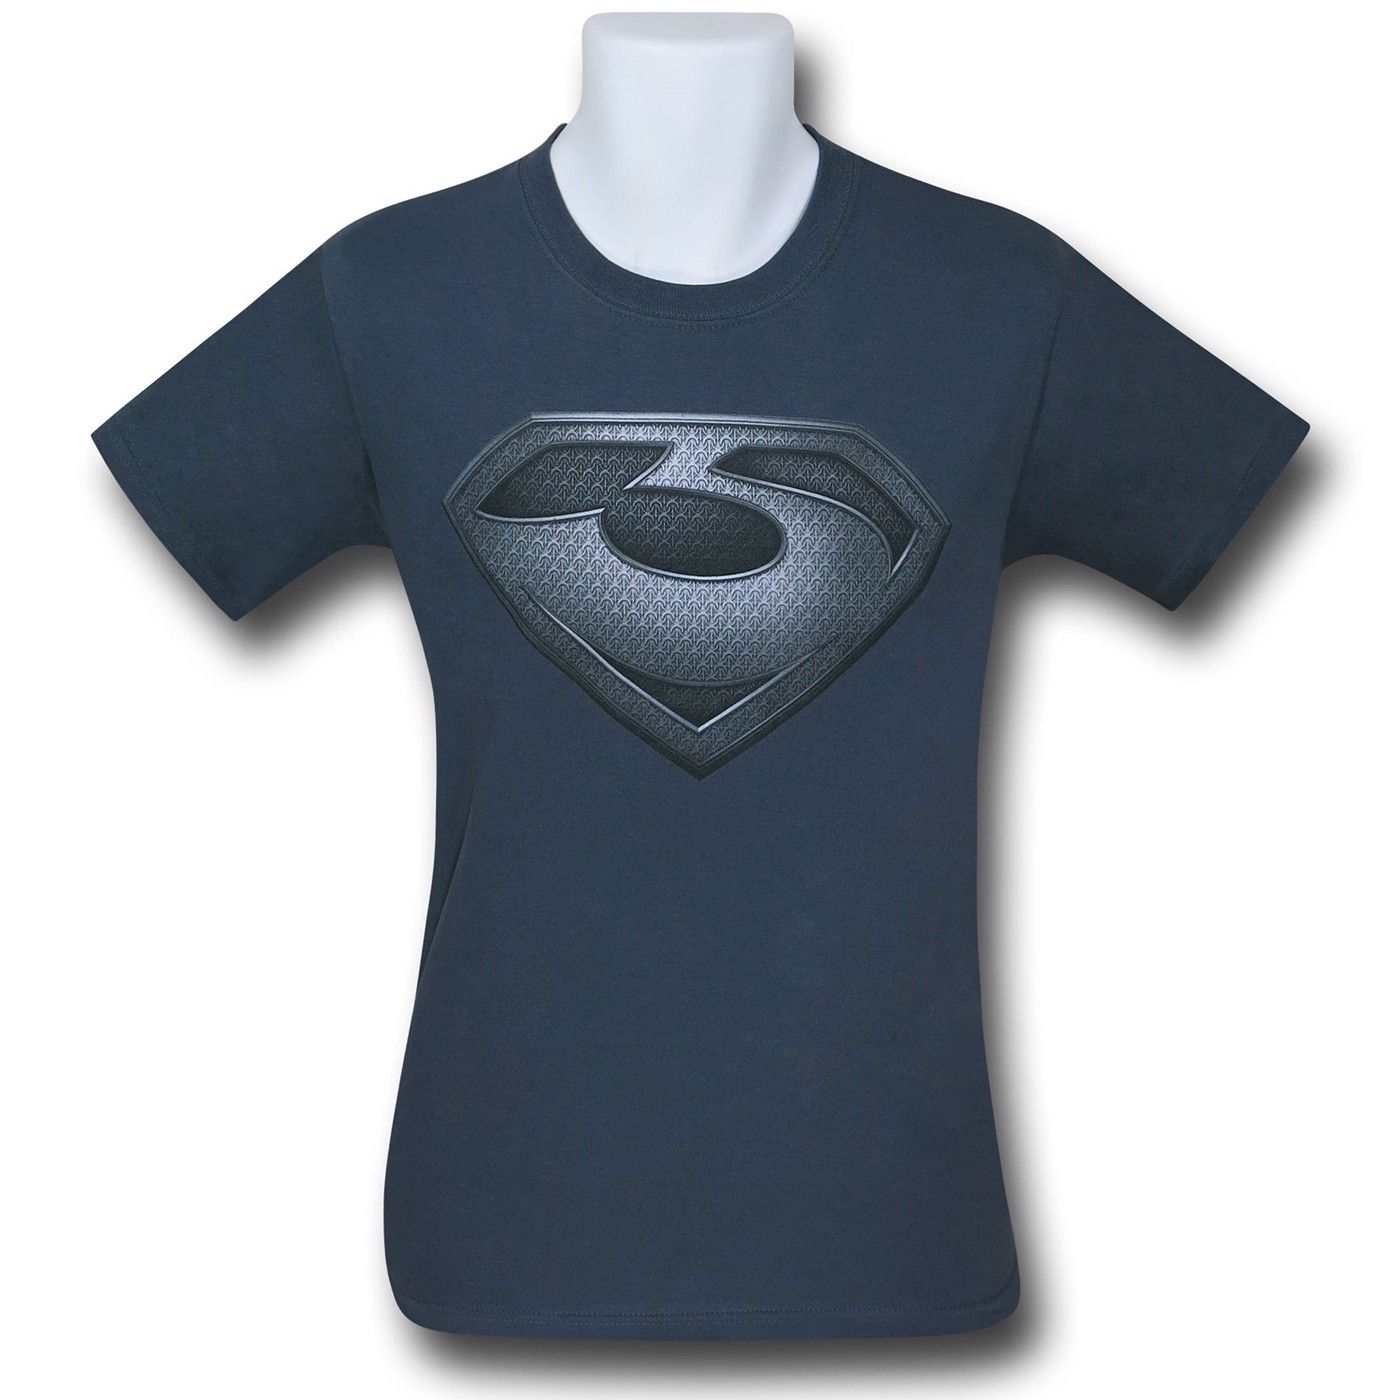 Man Of Steel Zod Armor Symbol Charcoal T-Shirt